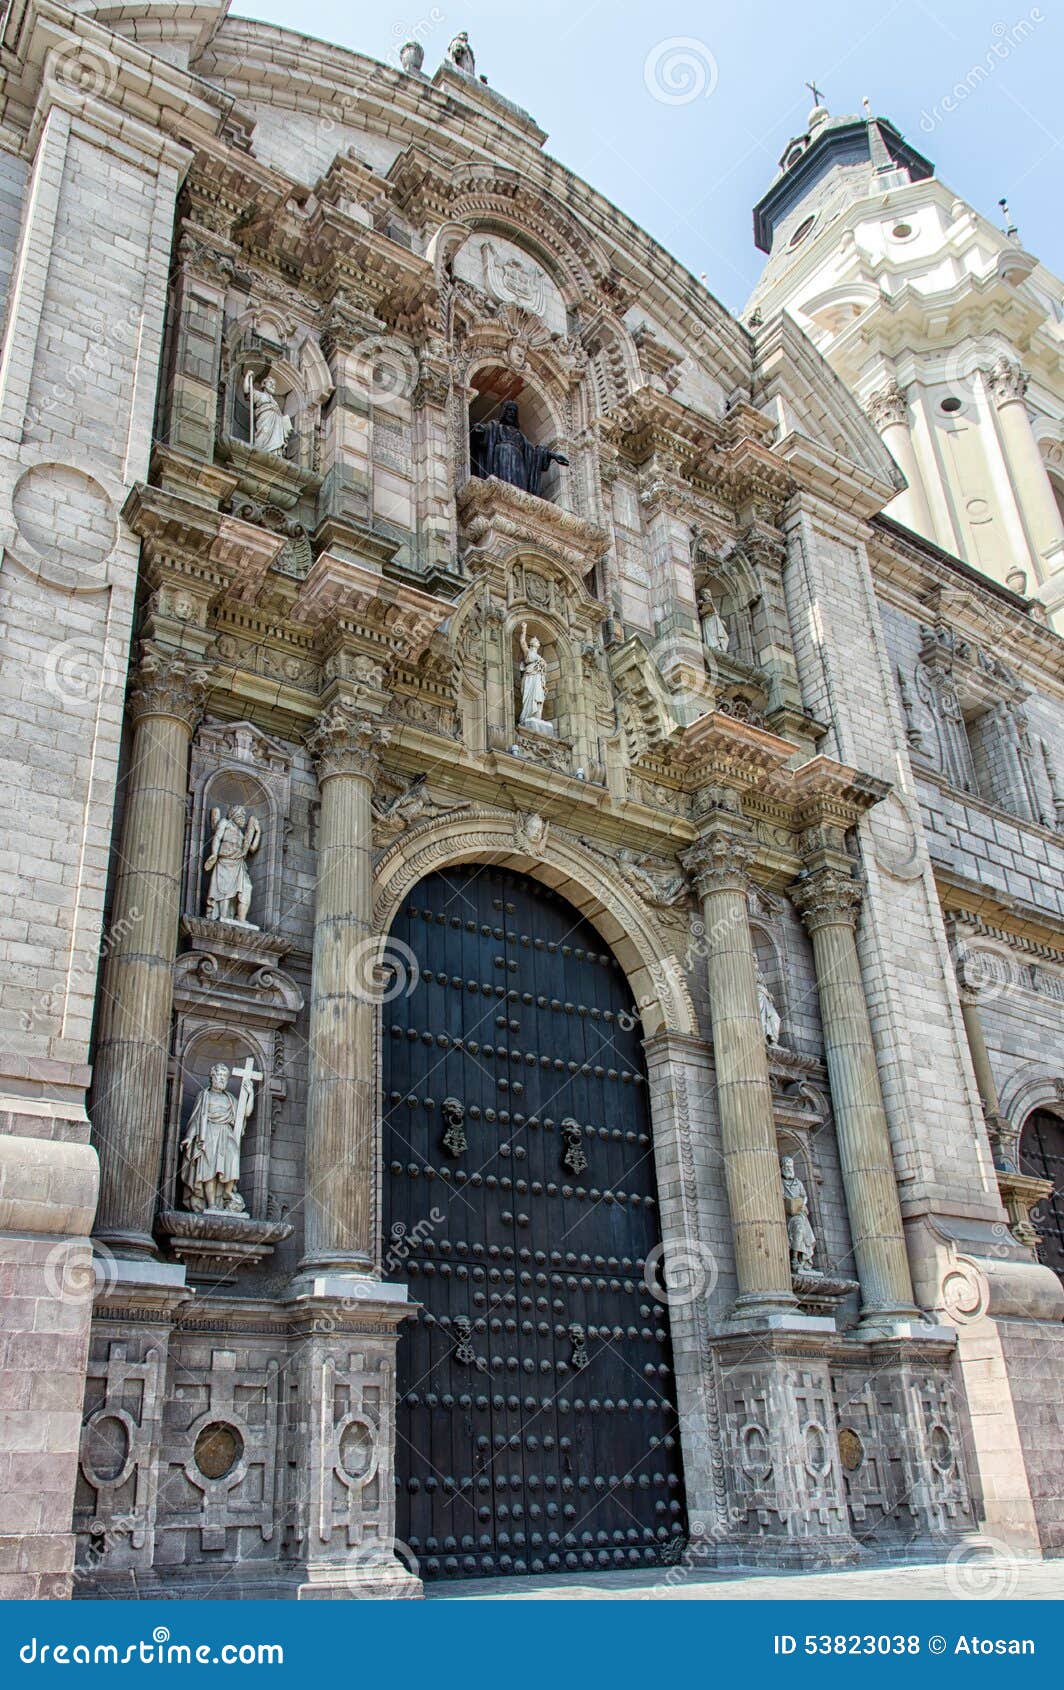 cathedral at plaza de armas, lima, peru